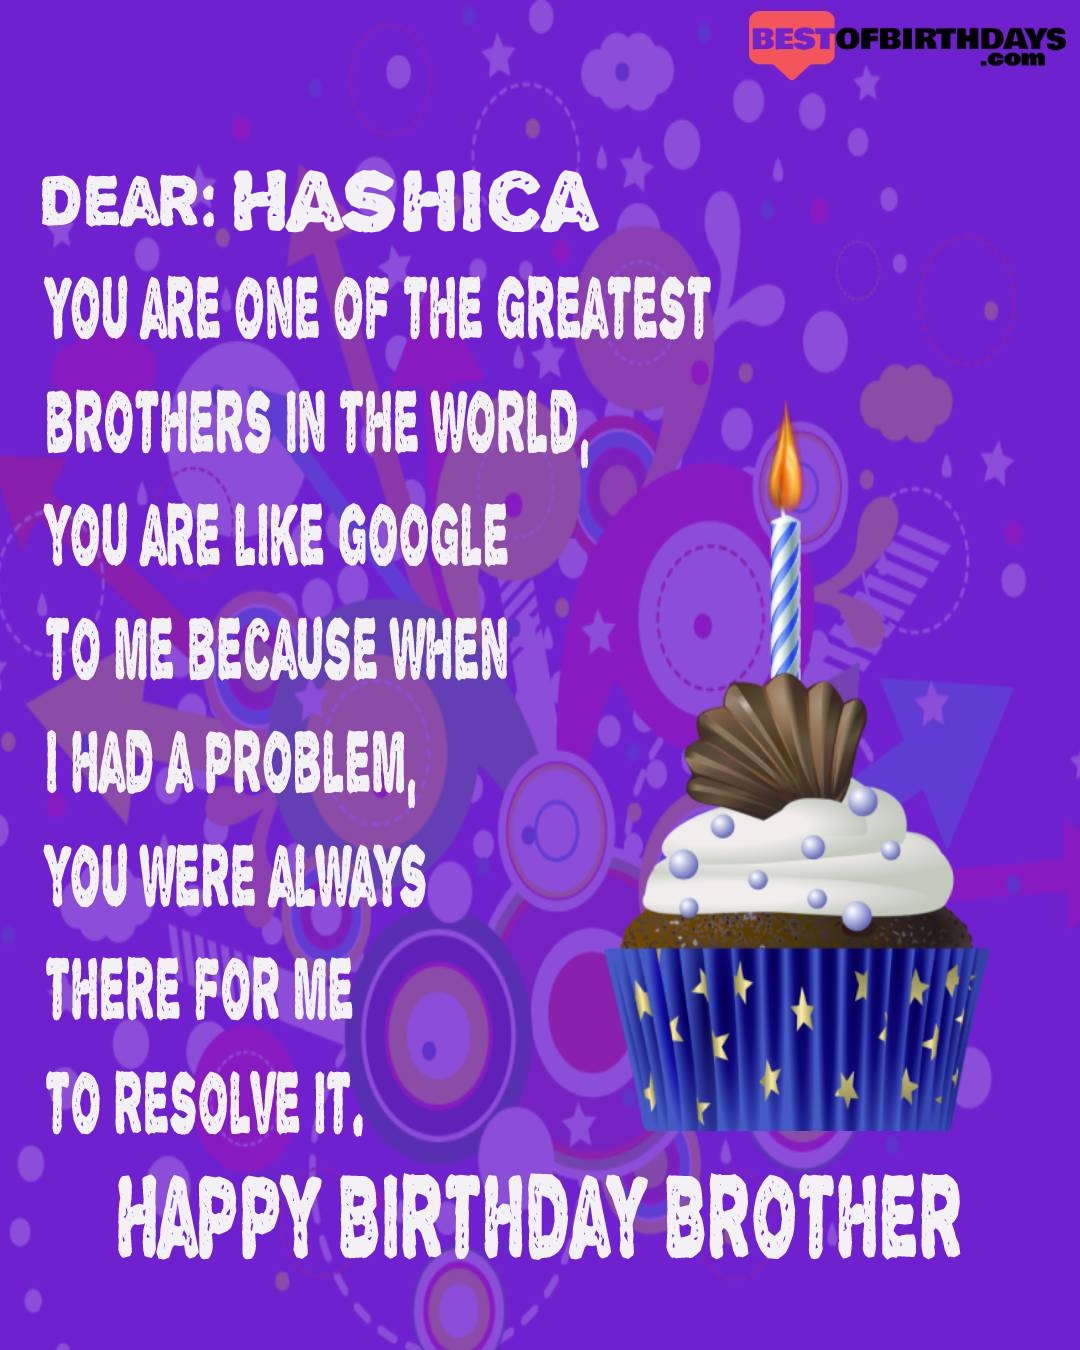 Happy birthday hashica bhai brother bro